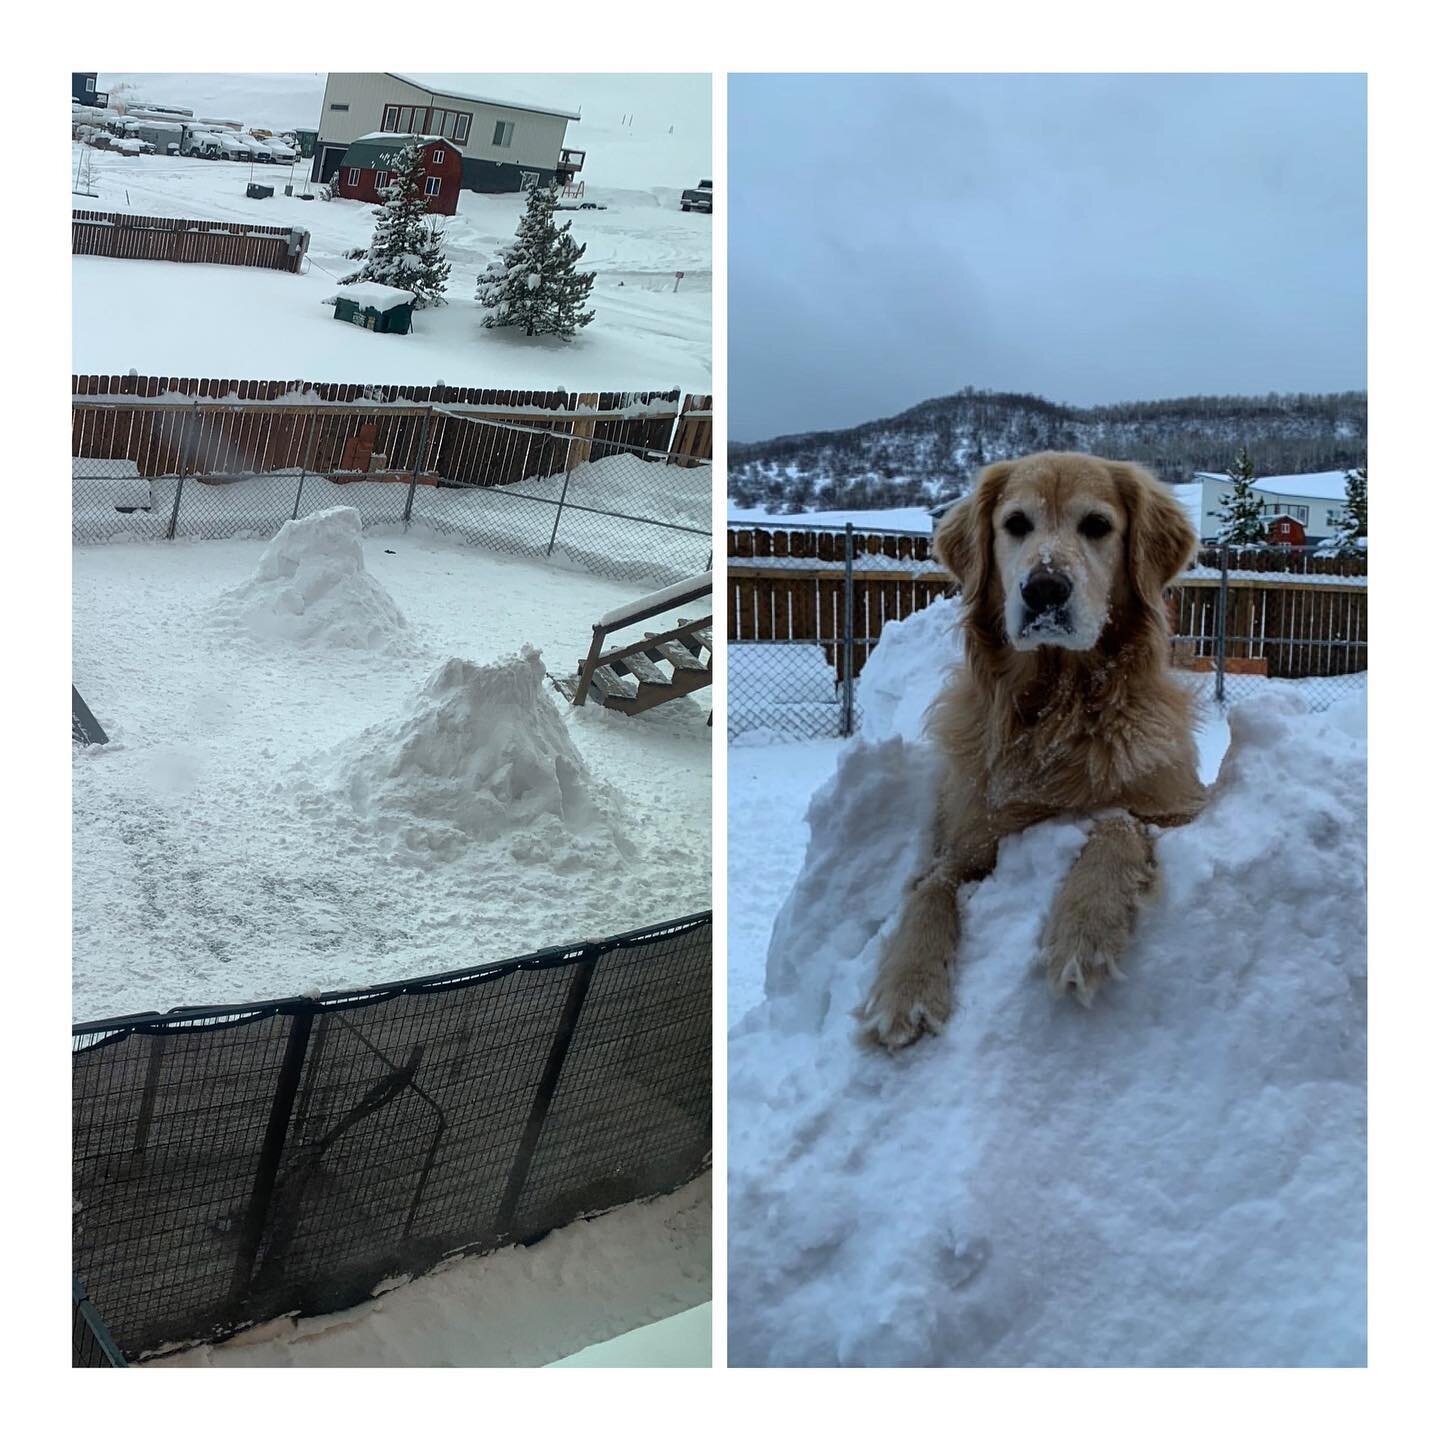 Snow castle : Boone in a snow castle! #peacelovepetcare #snowdog #boonedaboozer #snowcastle #snowmounds #steamboatdogs #steamboatsnaps #doggydaycare